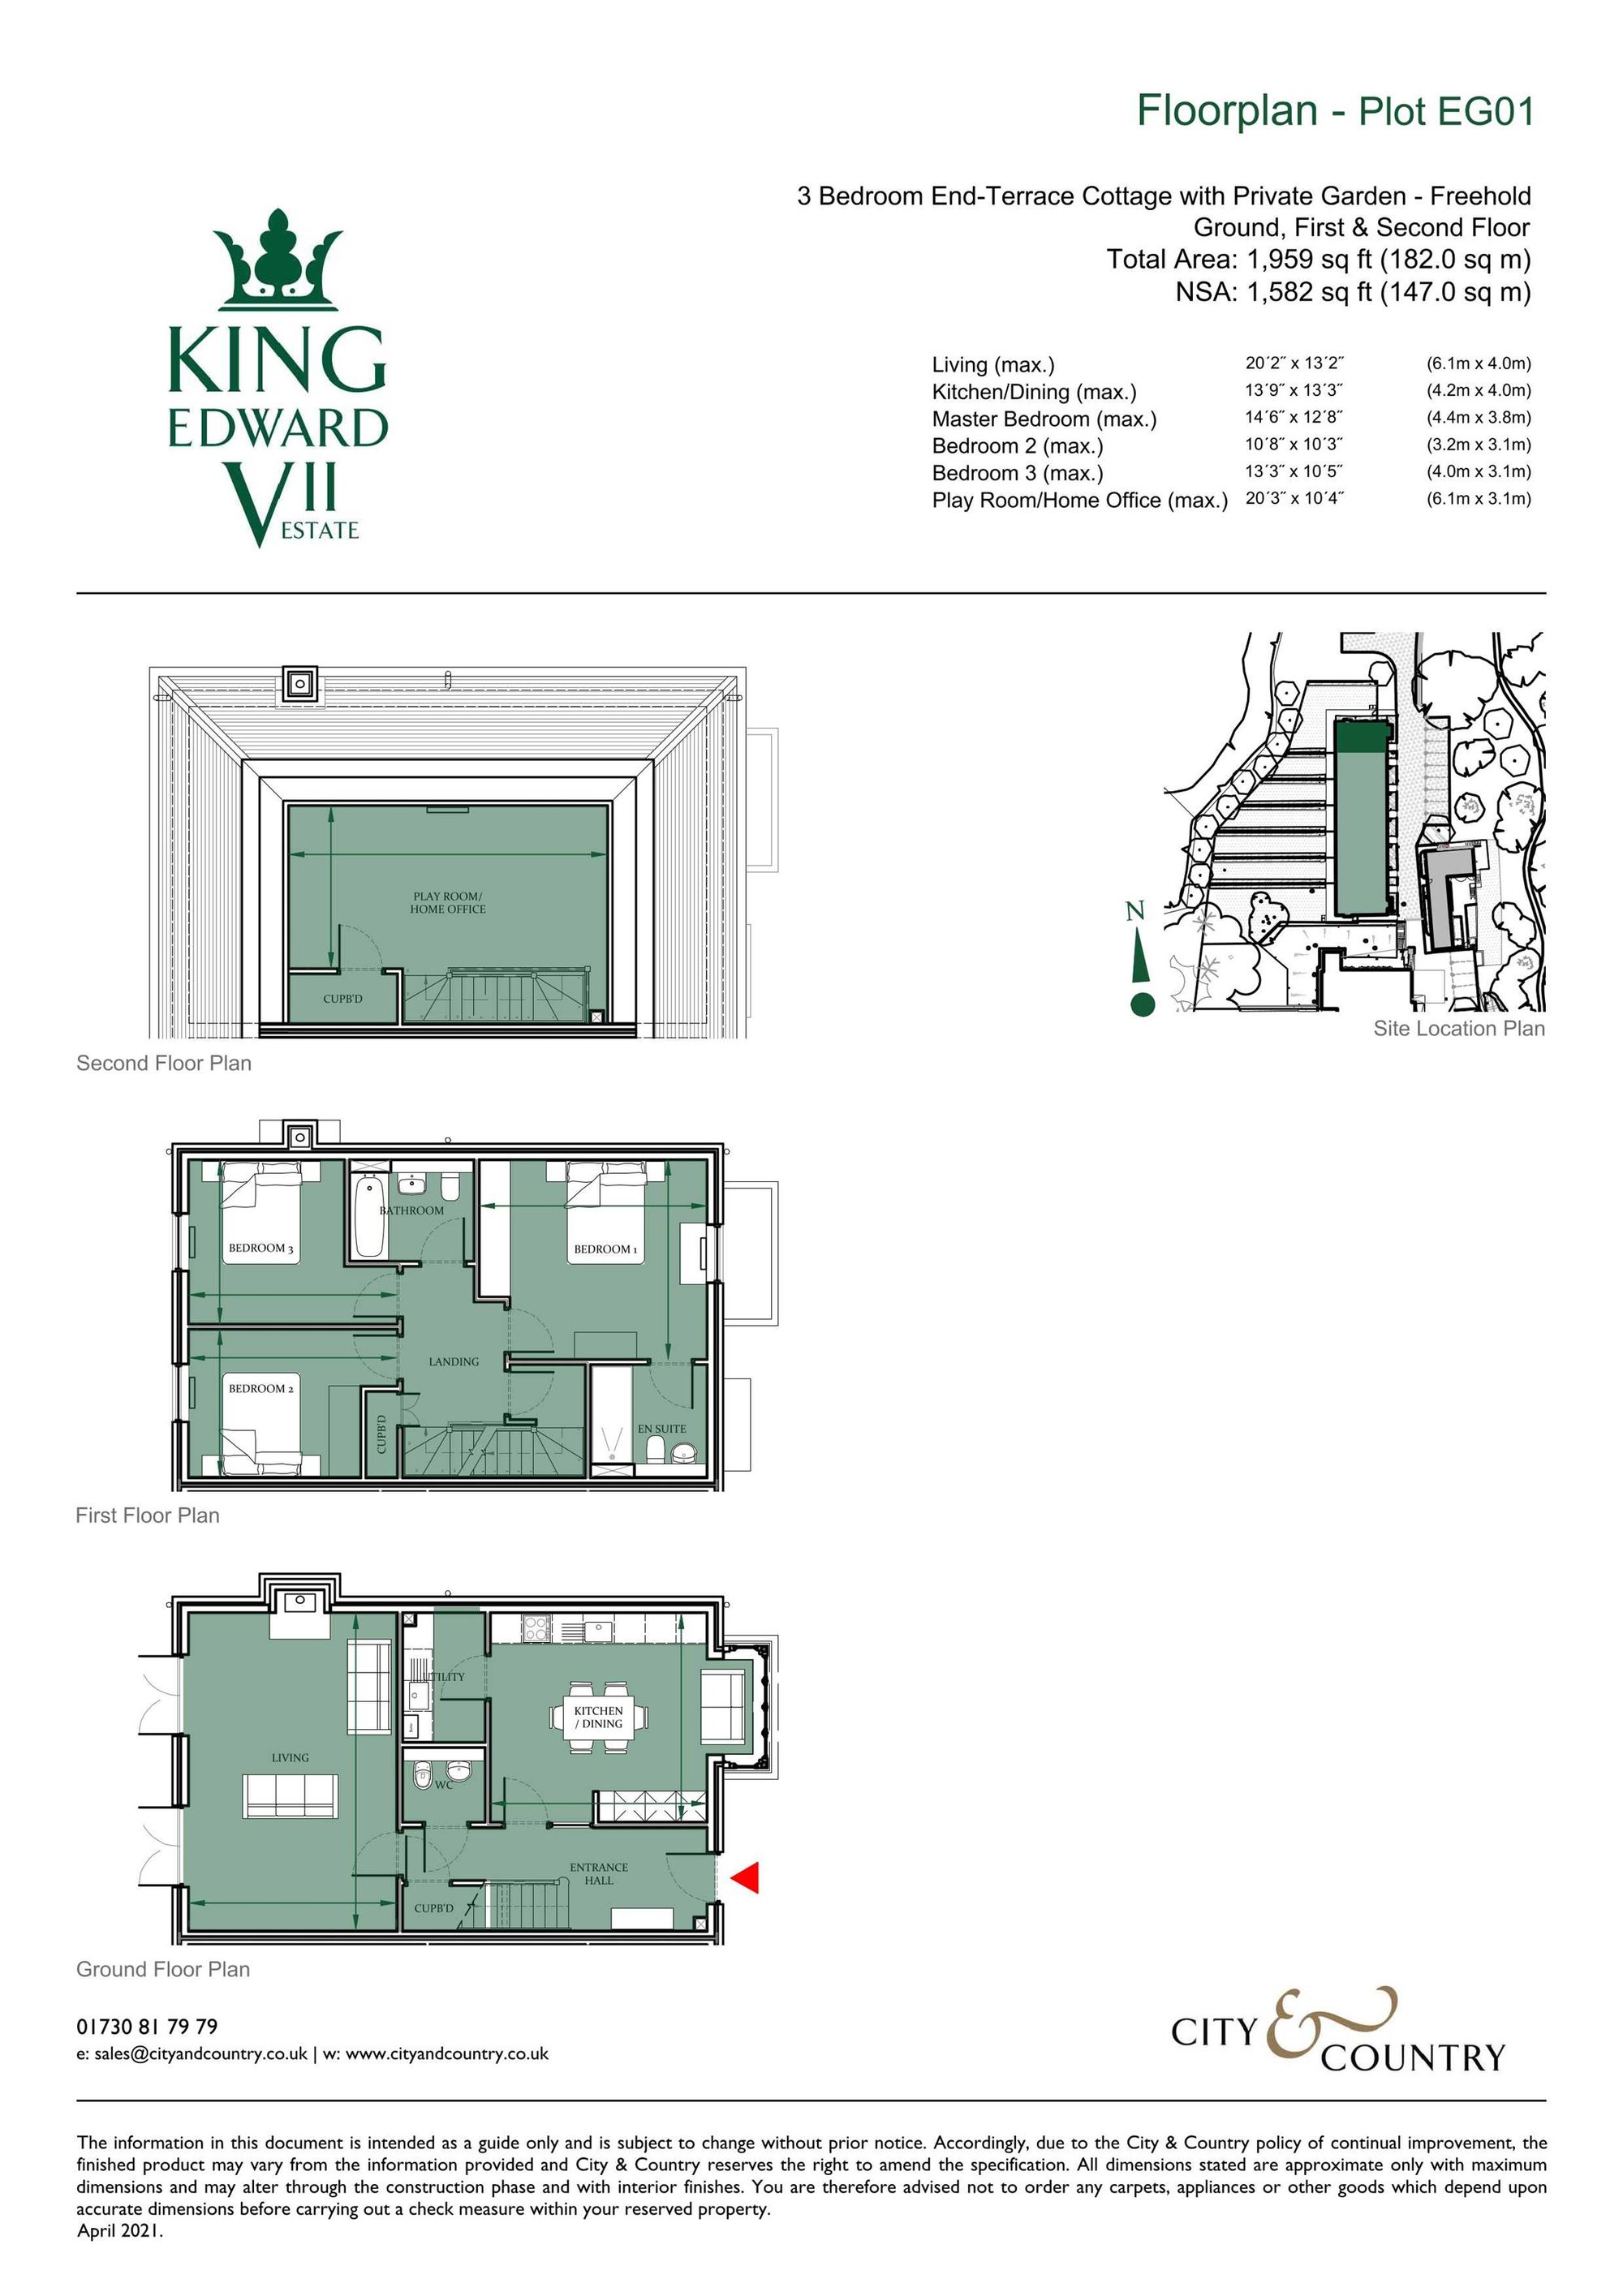 Kings Drive, Midhurst, GU29 floorplans